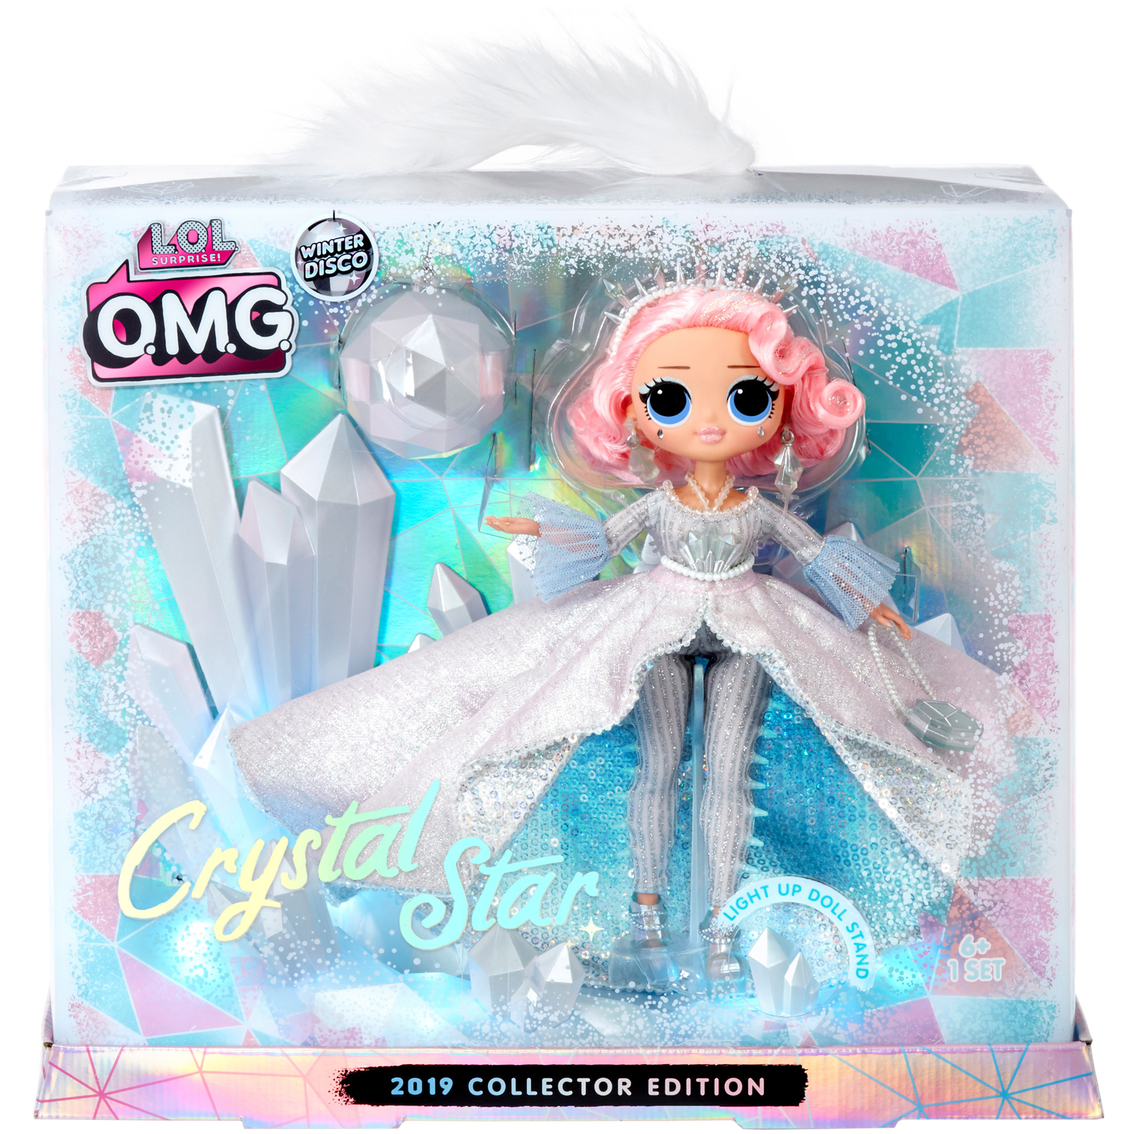 L.o.l. Surprise! O.m.g. Top Secret - M.c. Swag Winter Disco Doll 